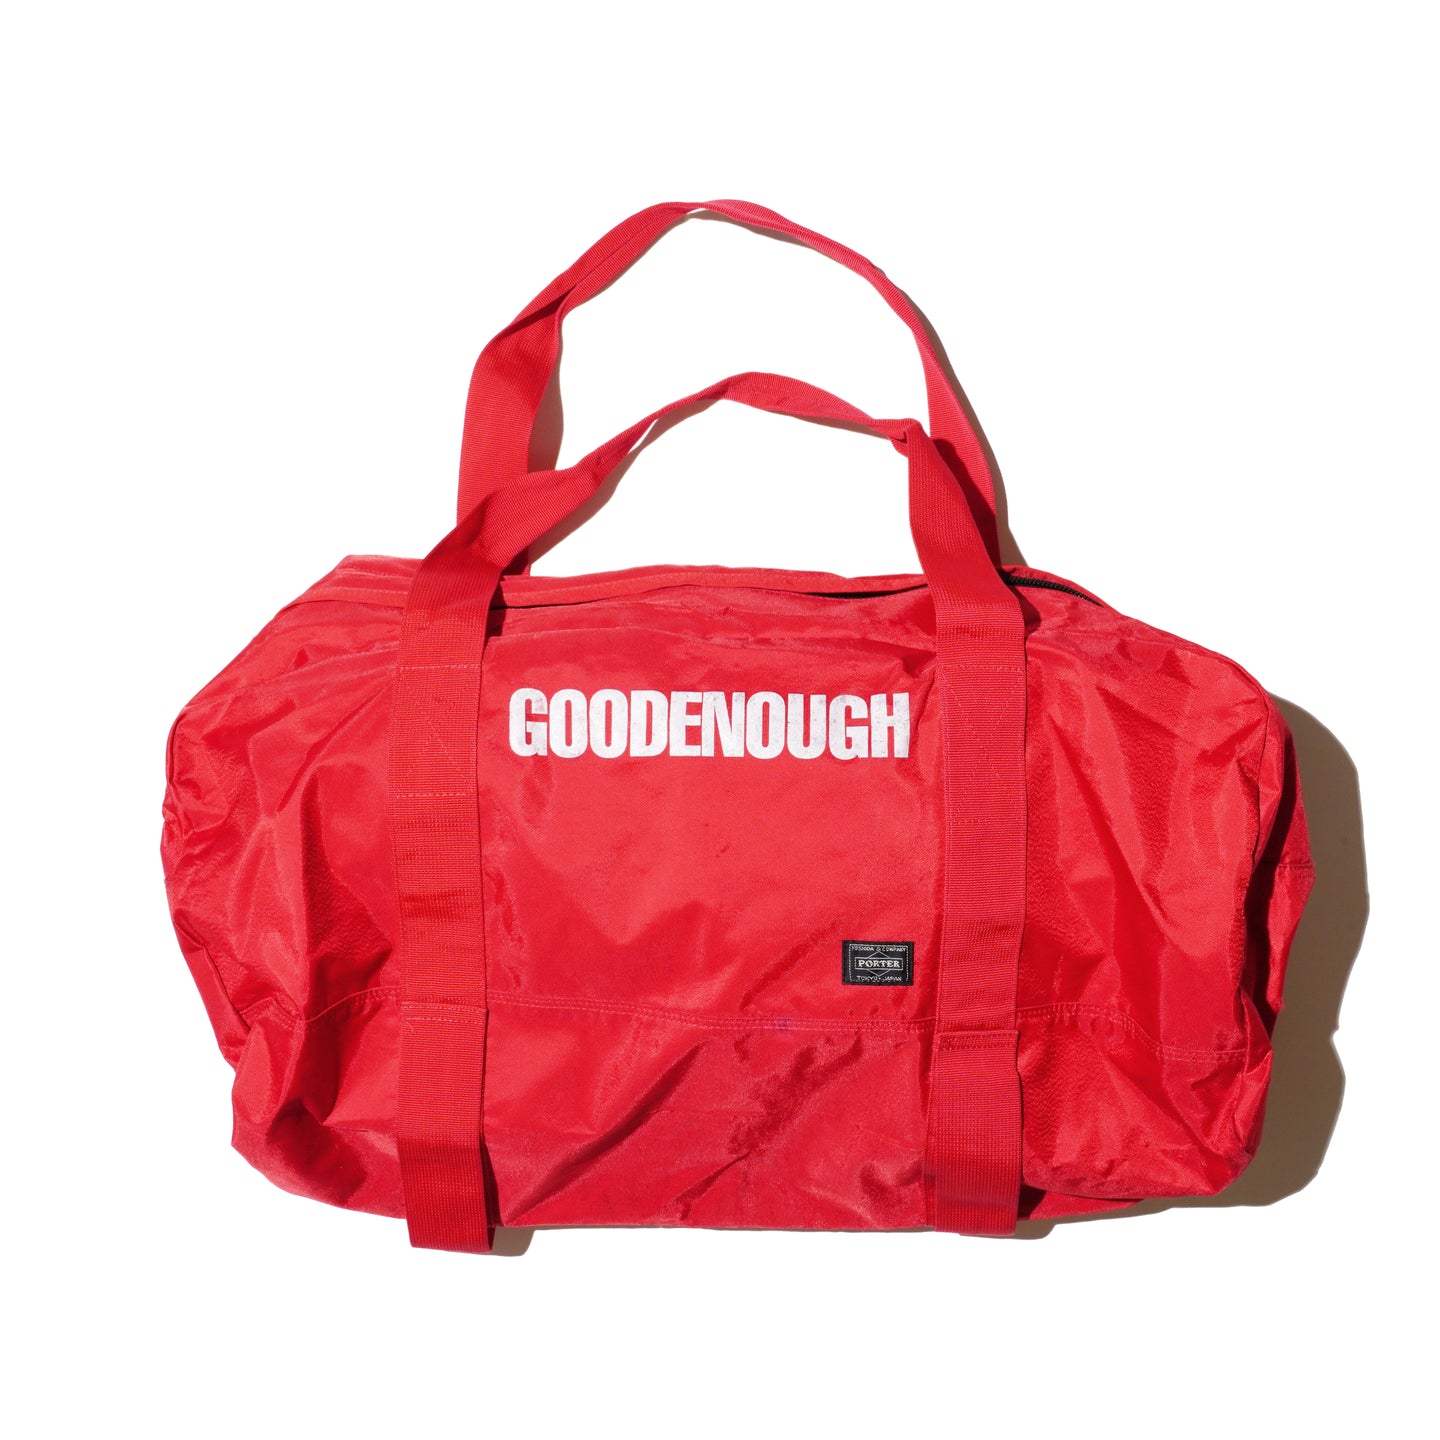 GOODENOUGH x Porter Duffle Bag (Large)